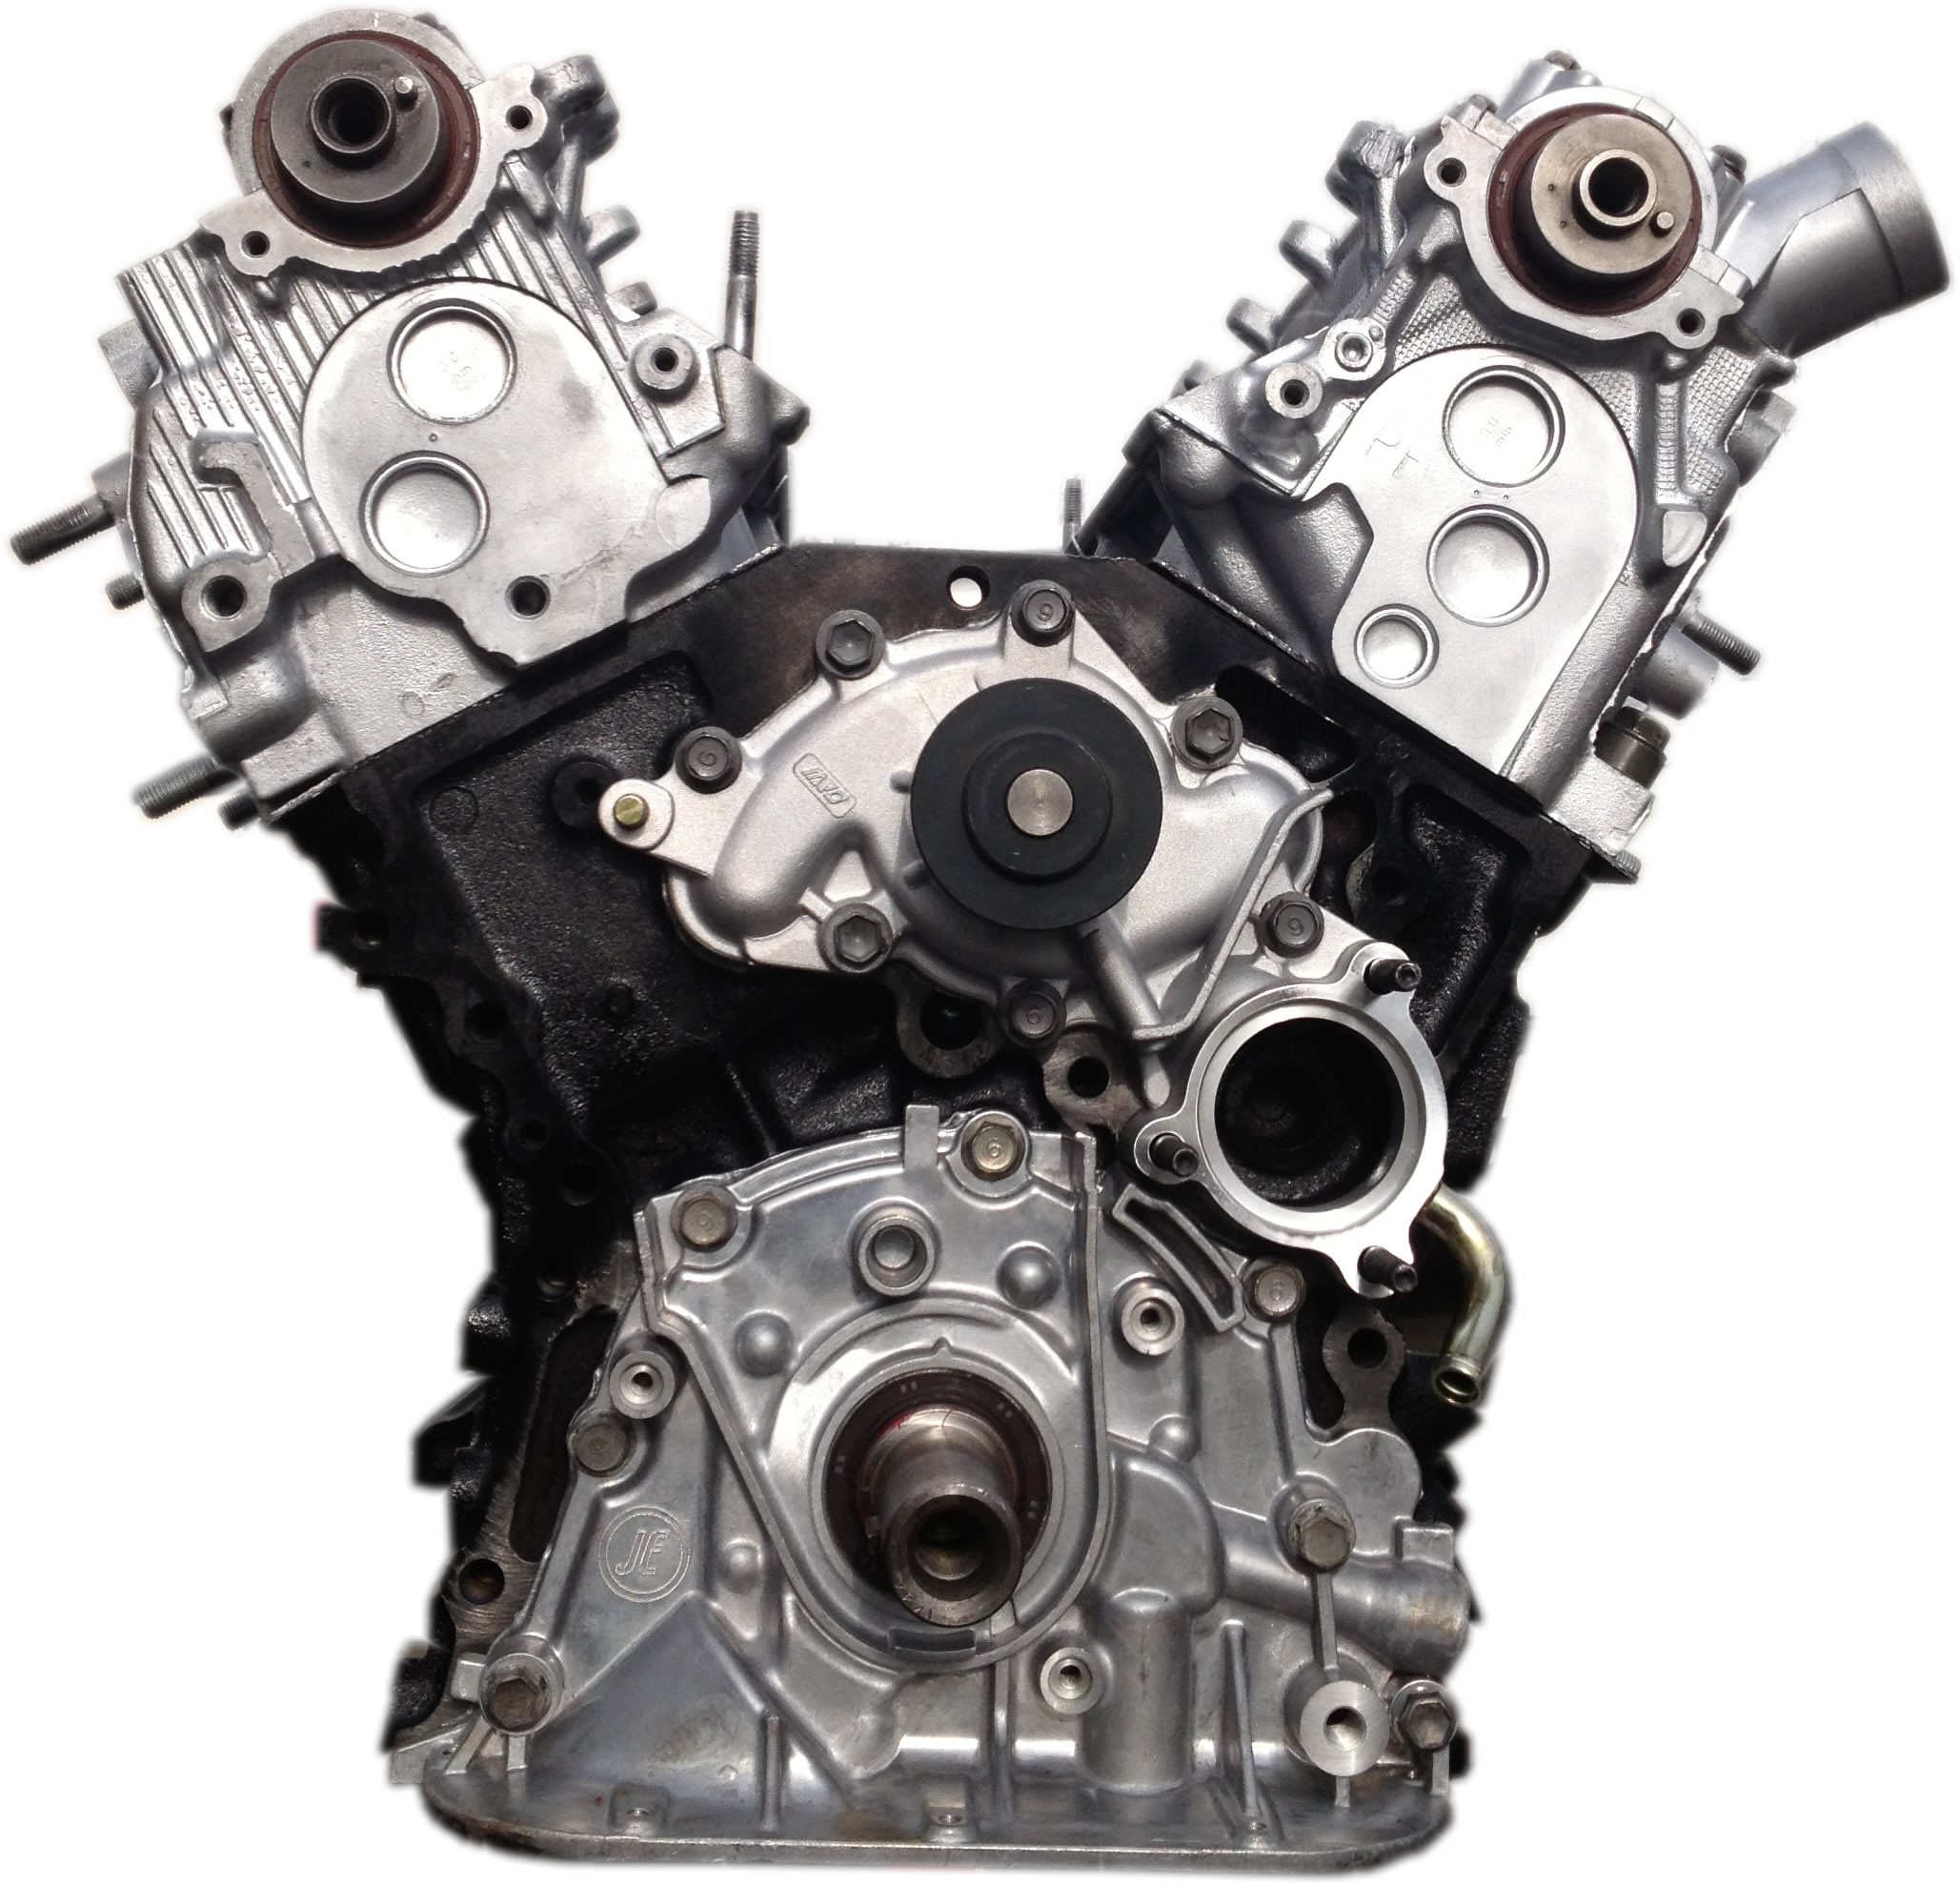 Rebuilt 89-95 Toyota Pick Up 3.0L V6 3VZE Engine « Kar King Auto